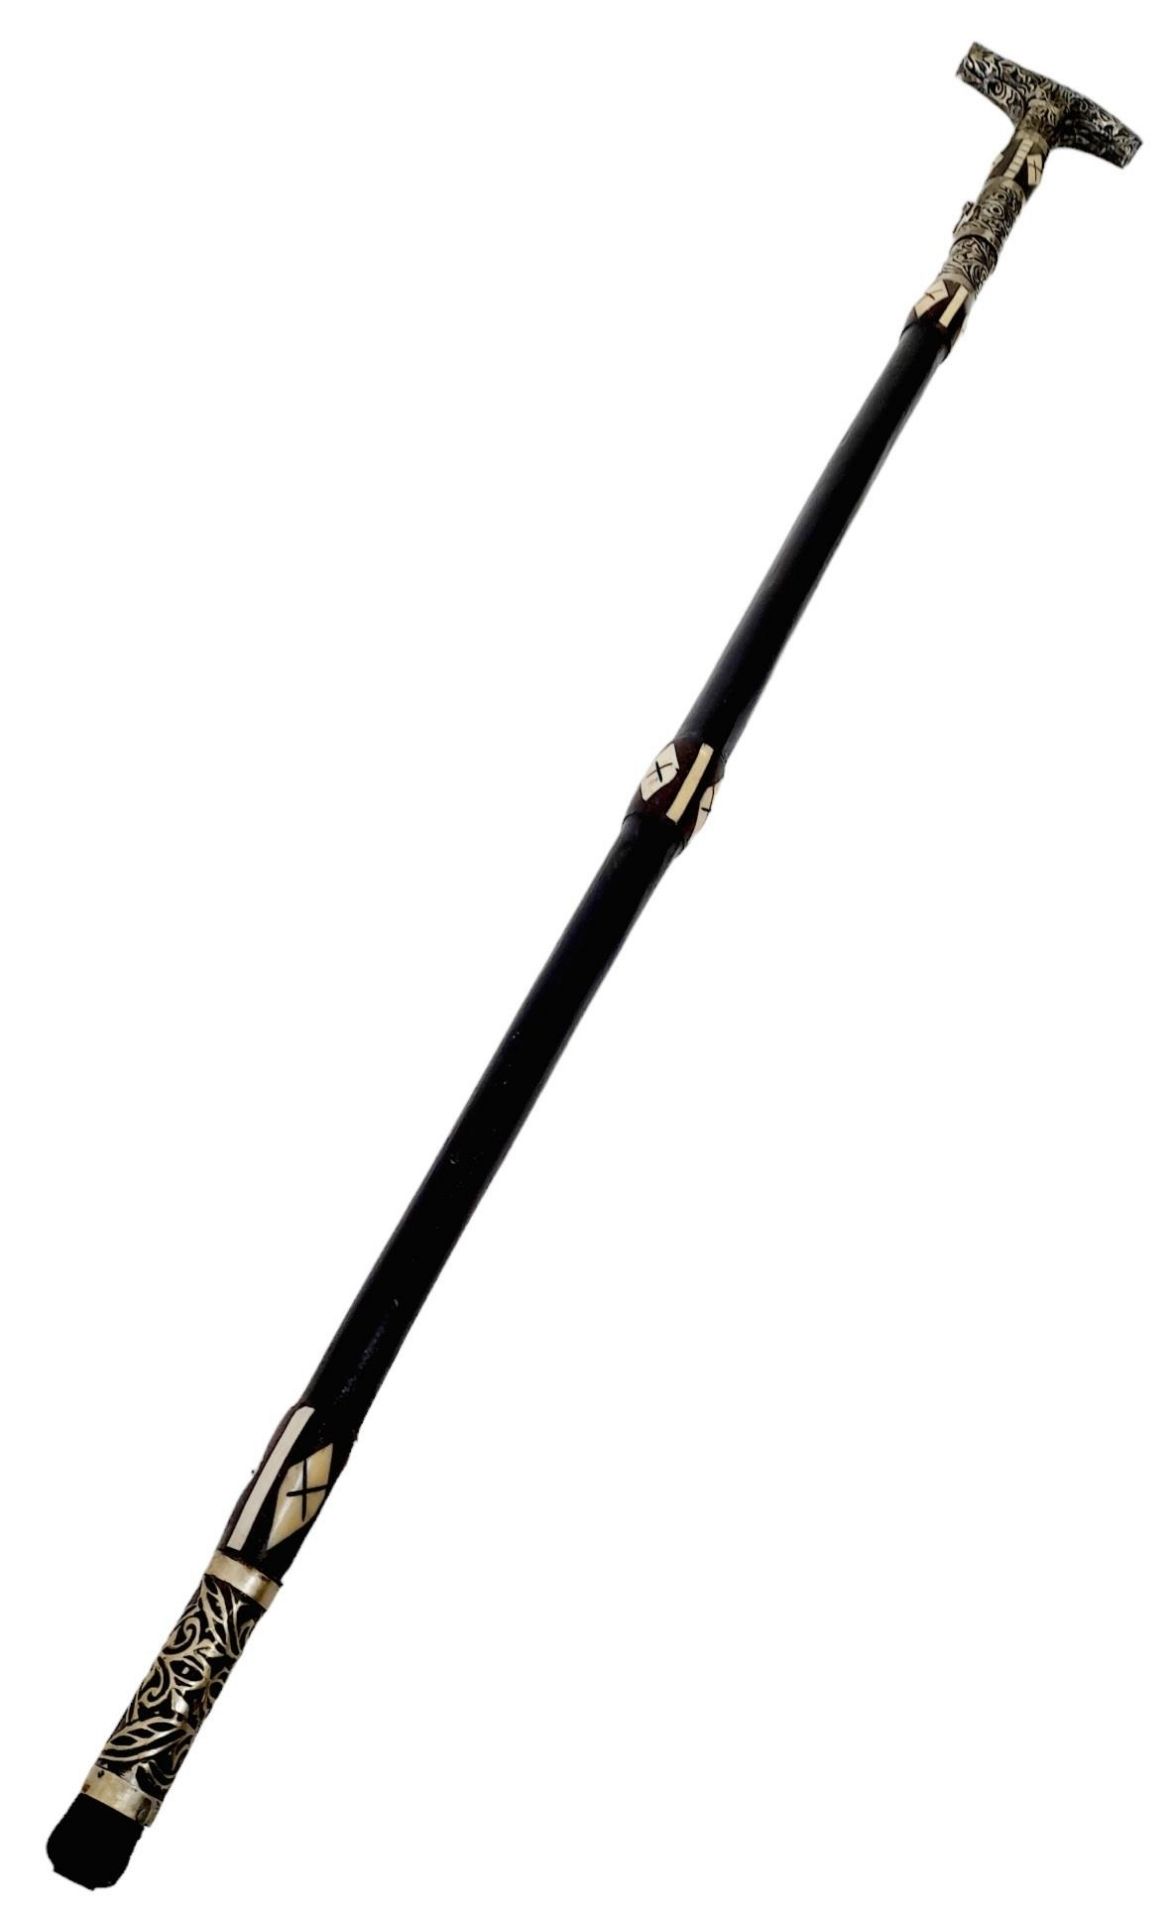 A Very Rare, Unique & Ornate Antique Bone Inlaid Wood and White Metal Sword Stick. 91cm Length. - Image 2 of 5